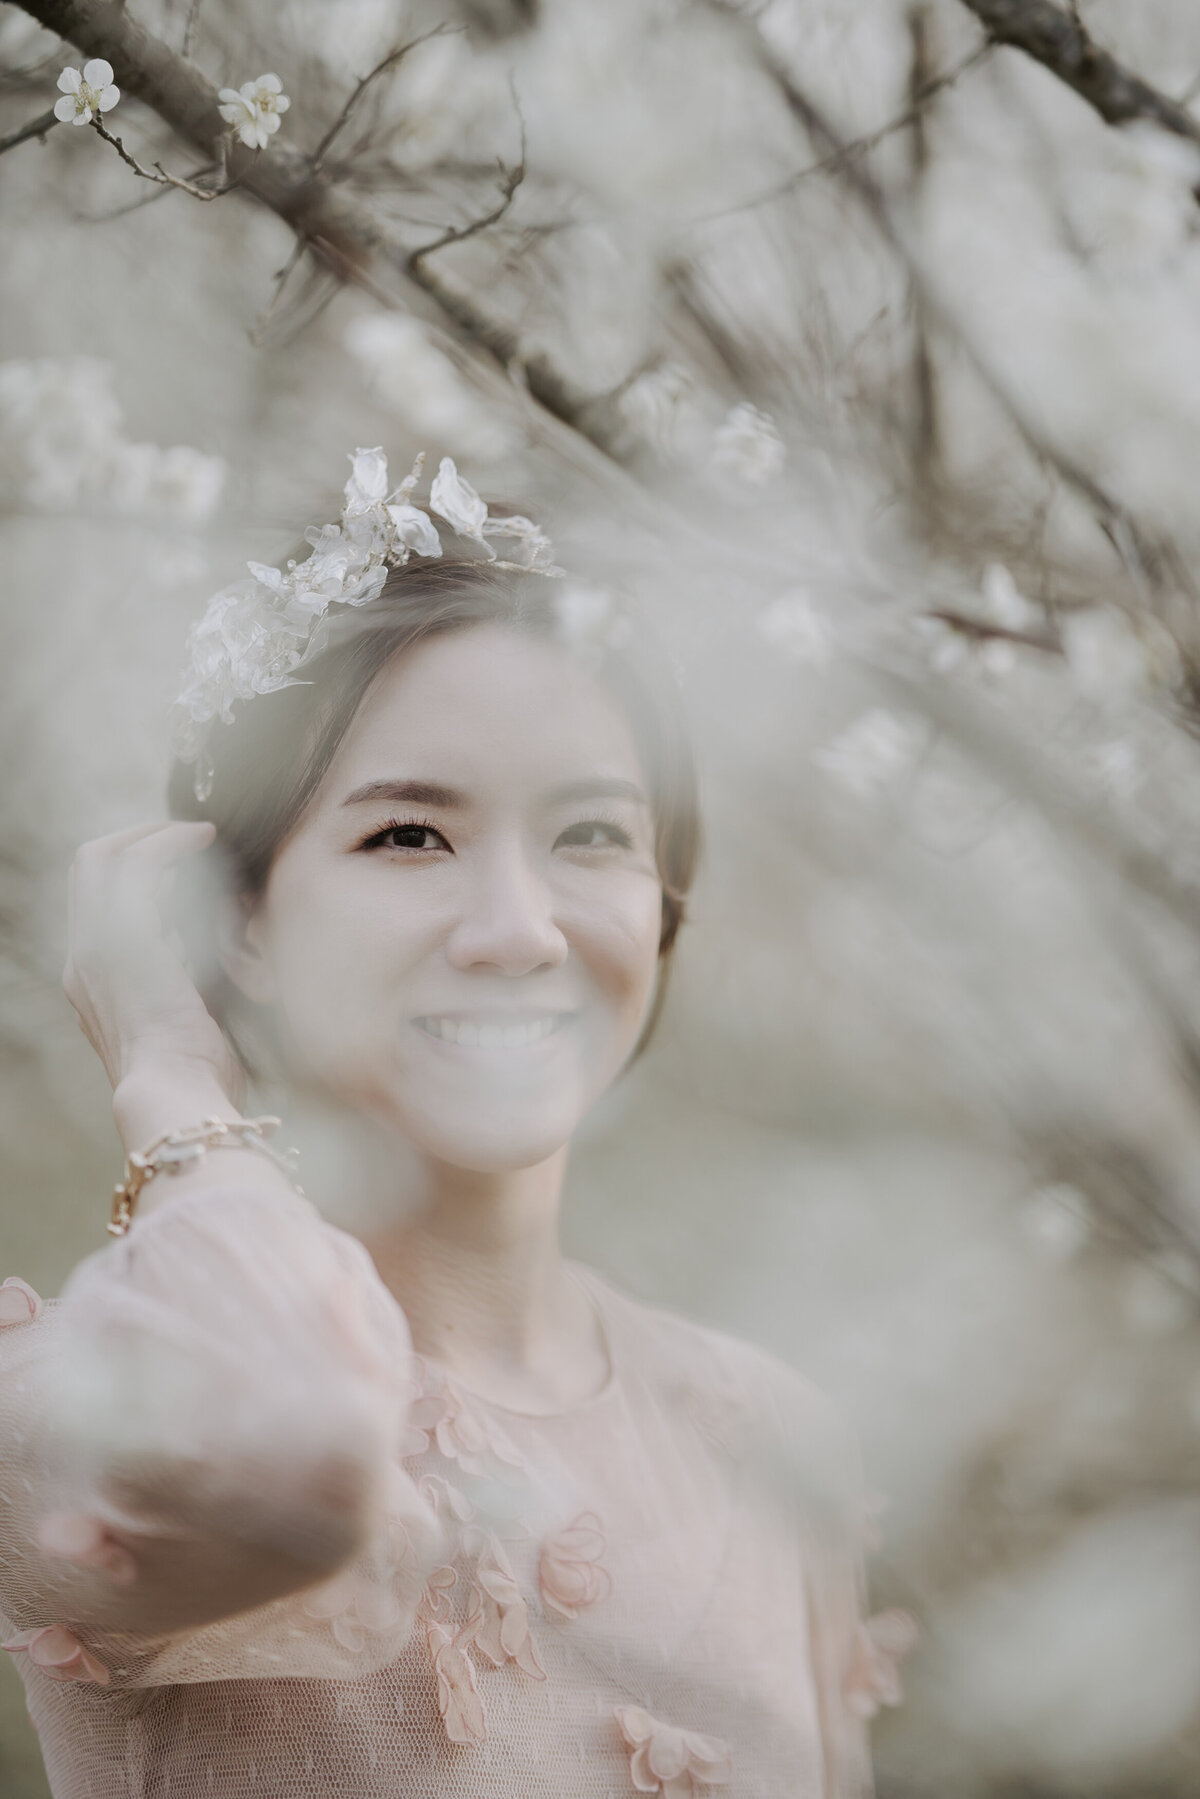 a Singaporean bride during her prewedding photoshoot in South Korea